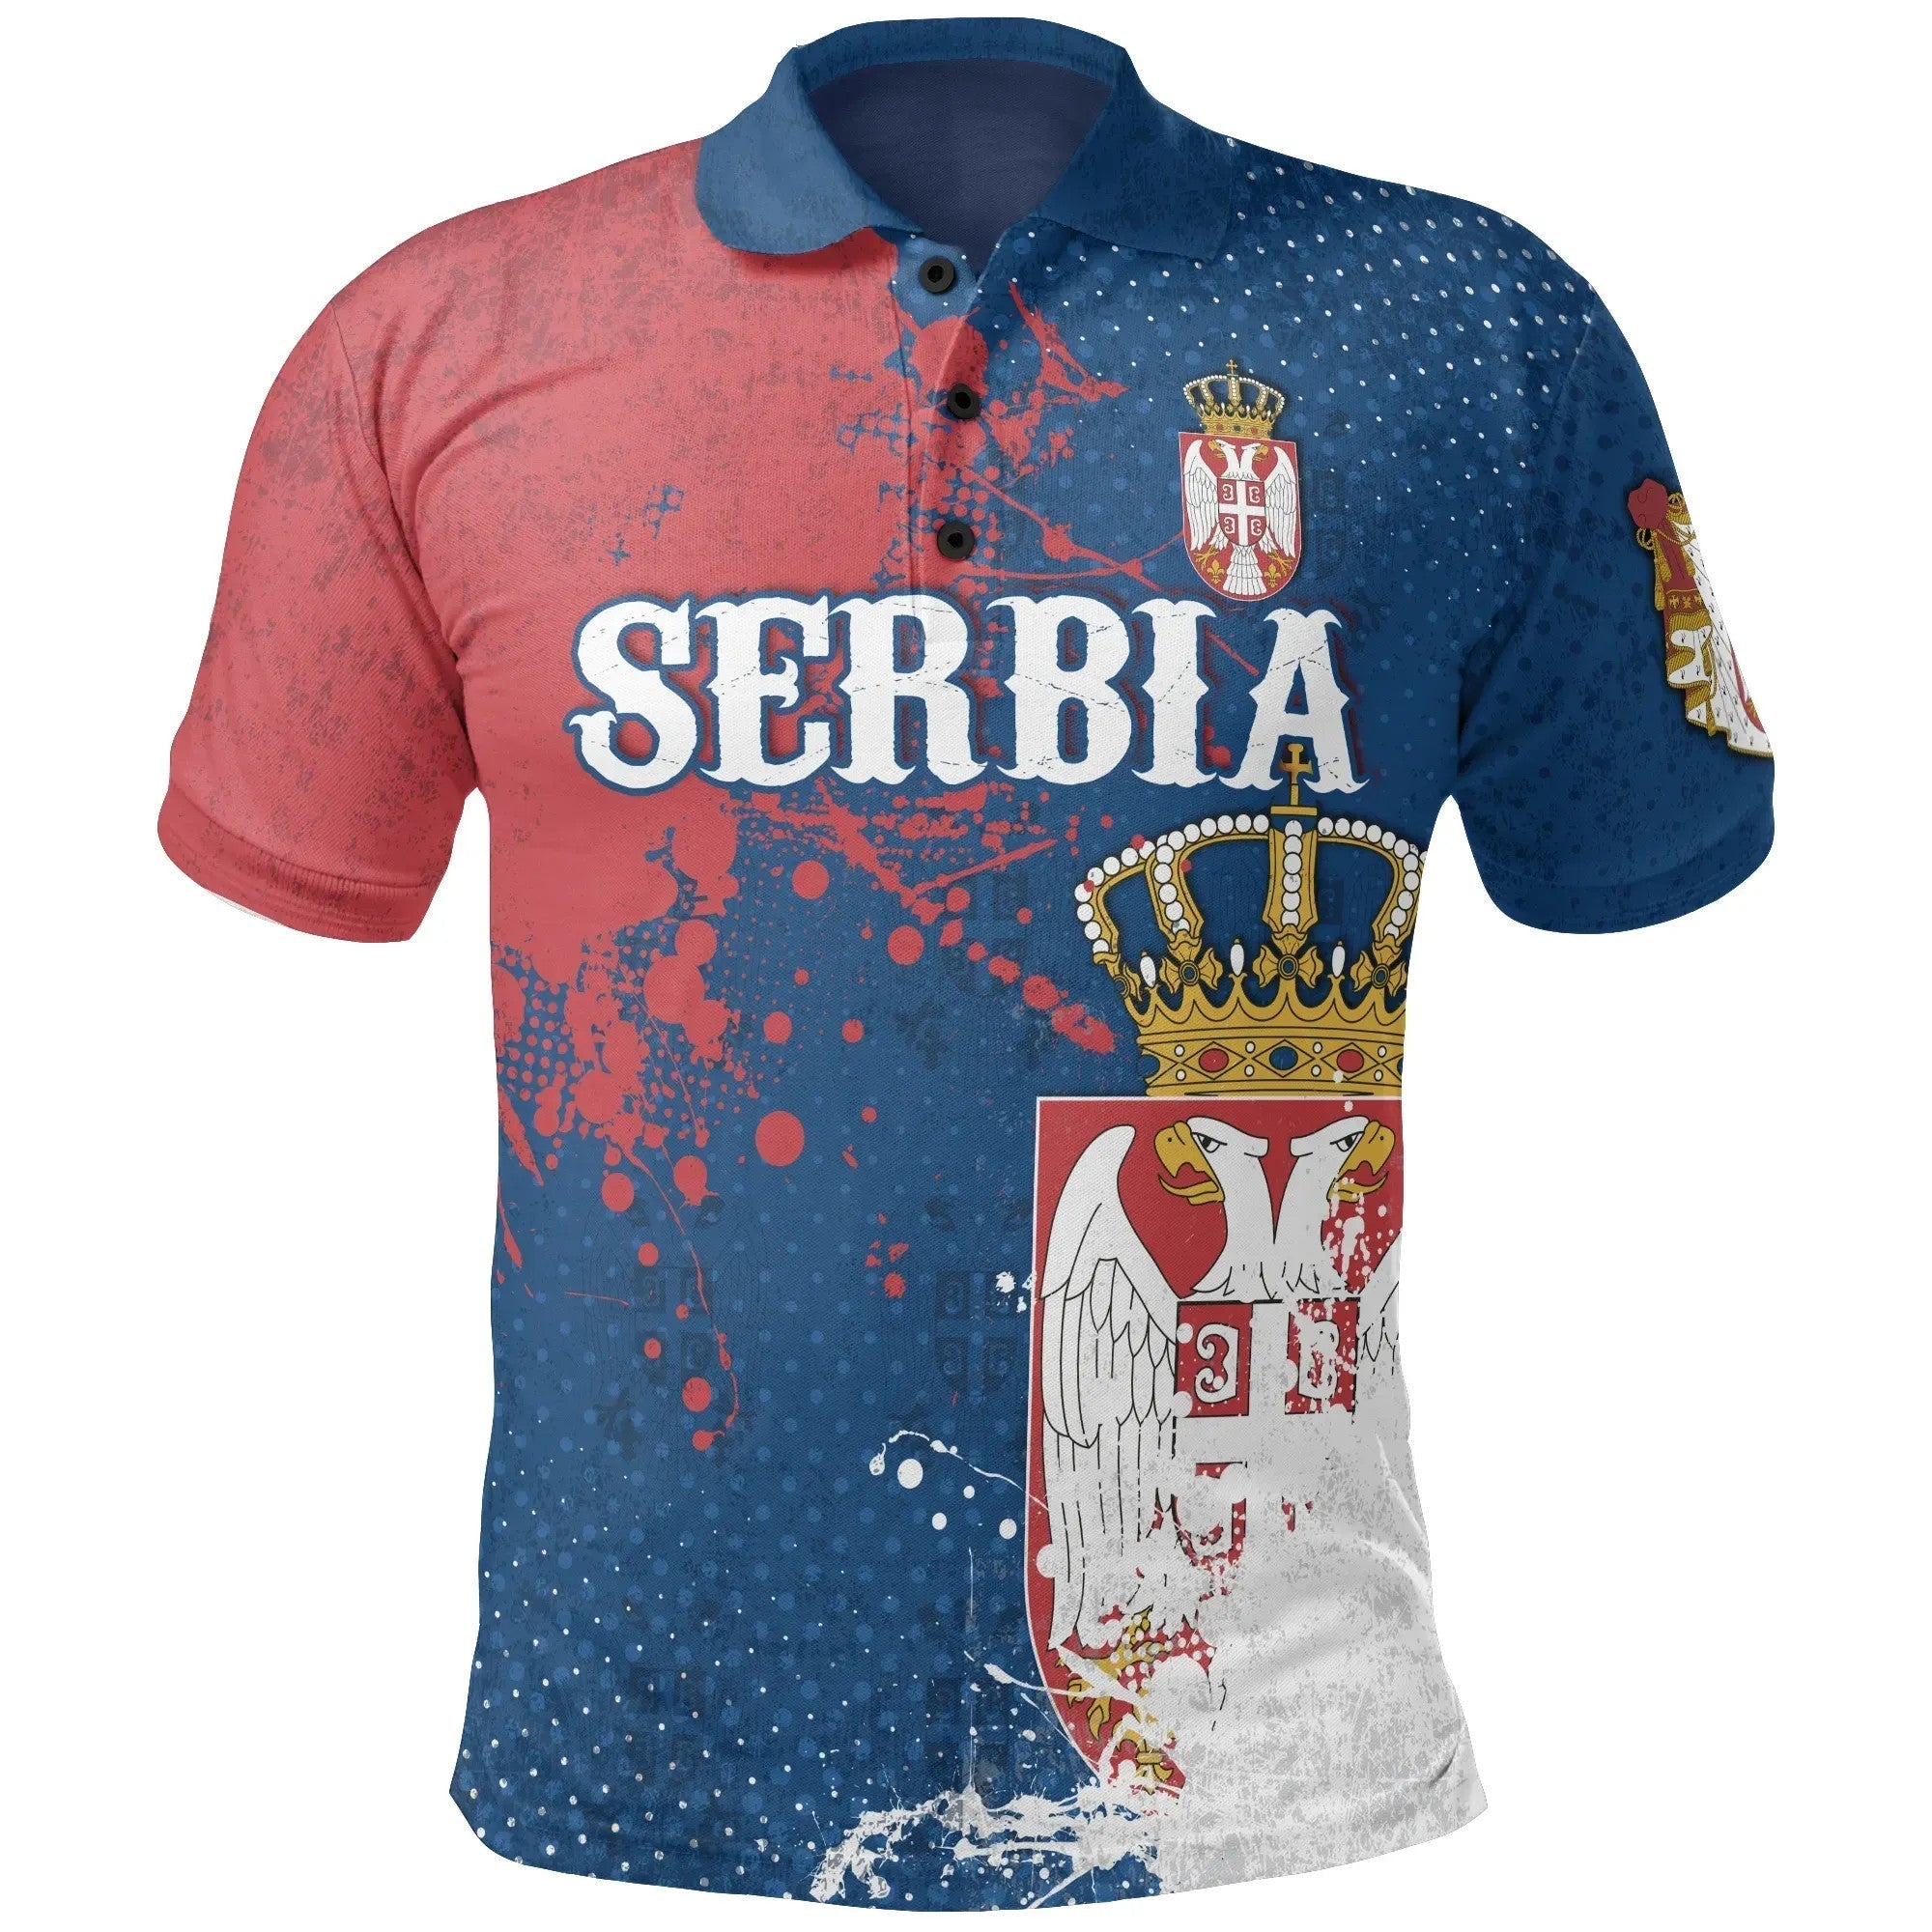 serbia-polo-shirt-the-great-serbia-original